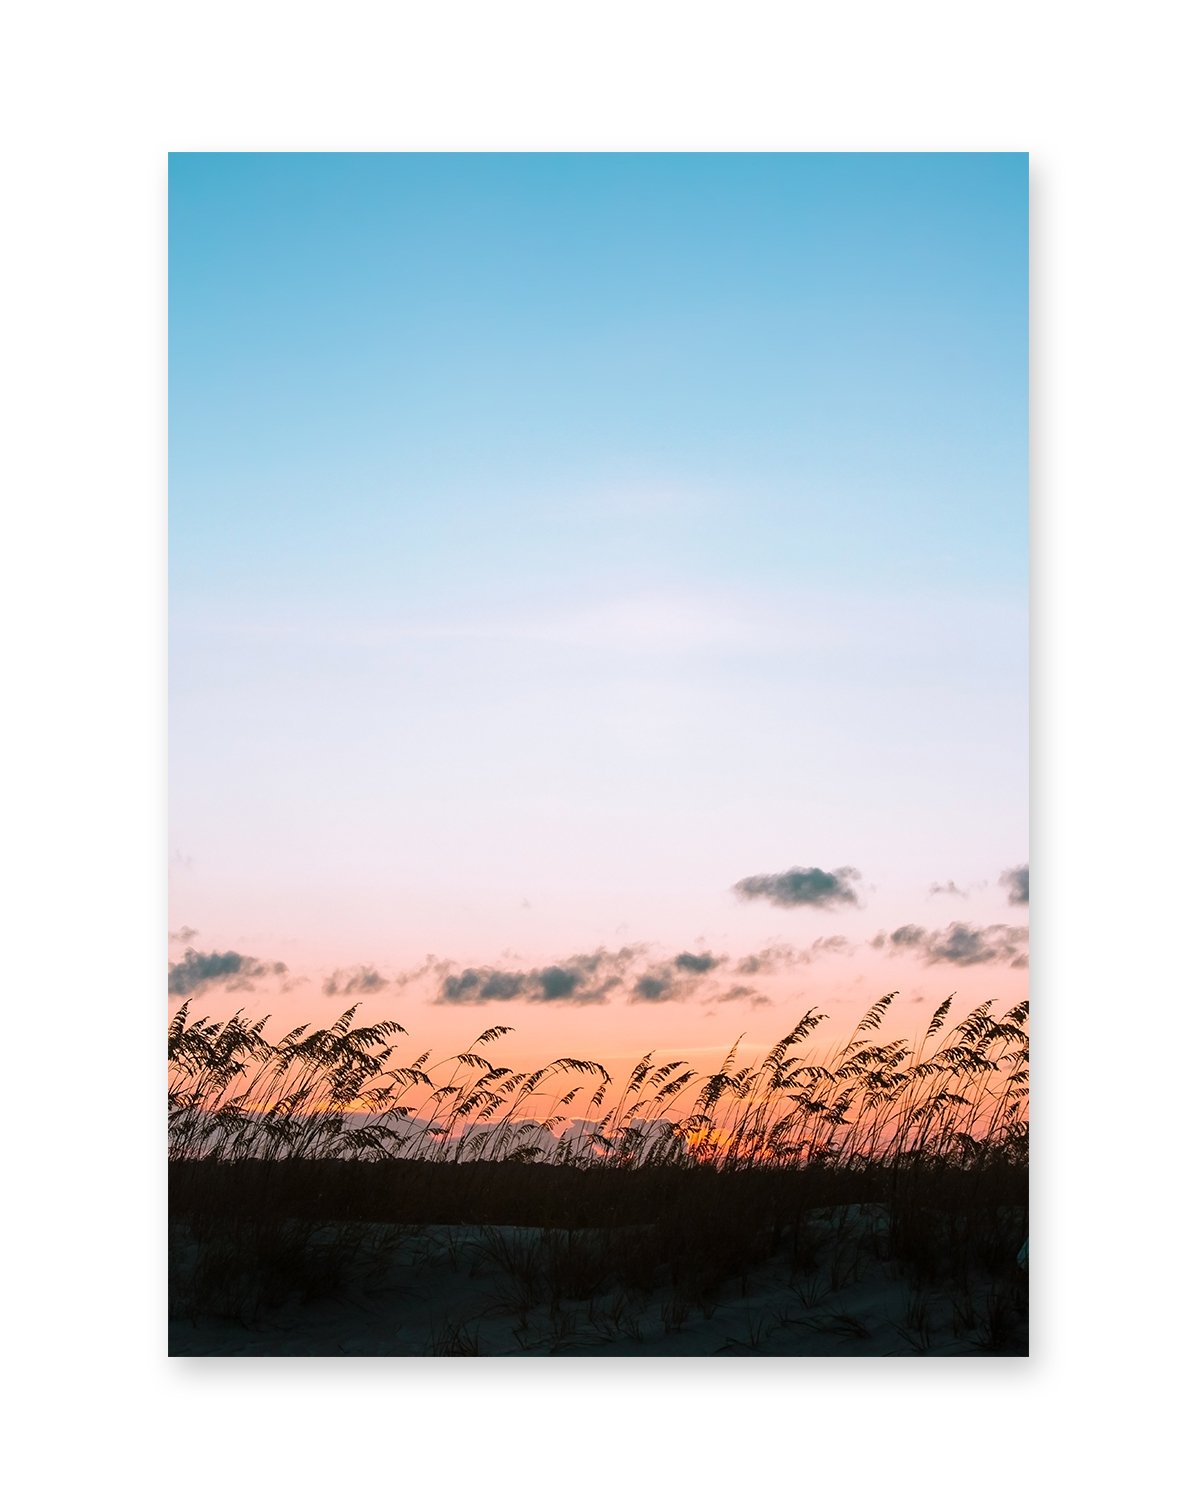 blue sunset sea grass beach photograph, Wright and Roam